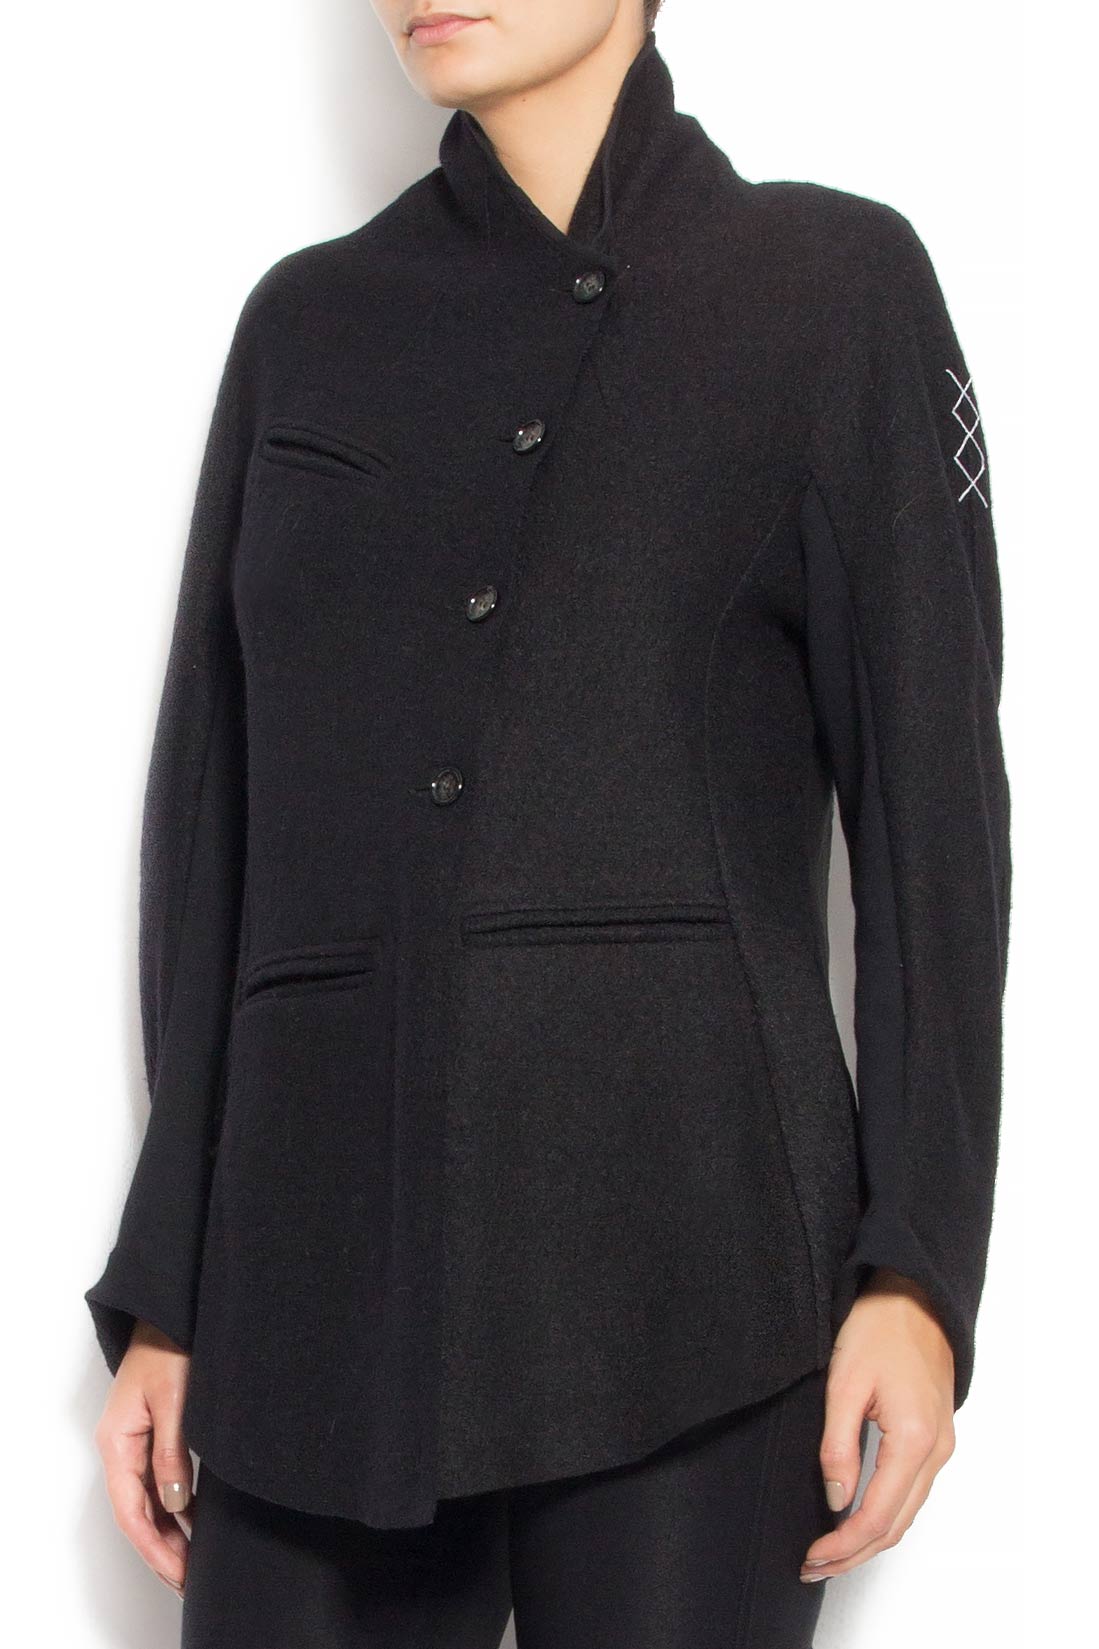 'Divergent Blazer' wool and silk jacket Studio Cabal image 1